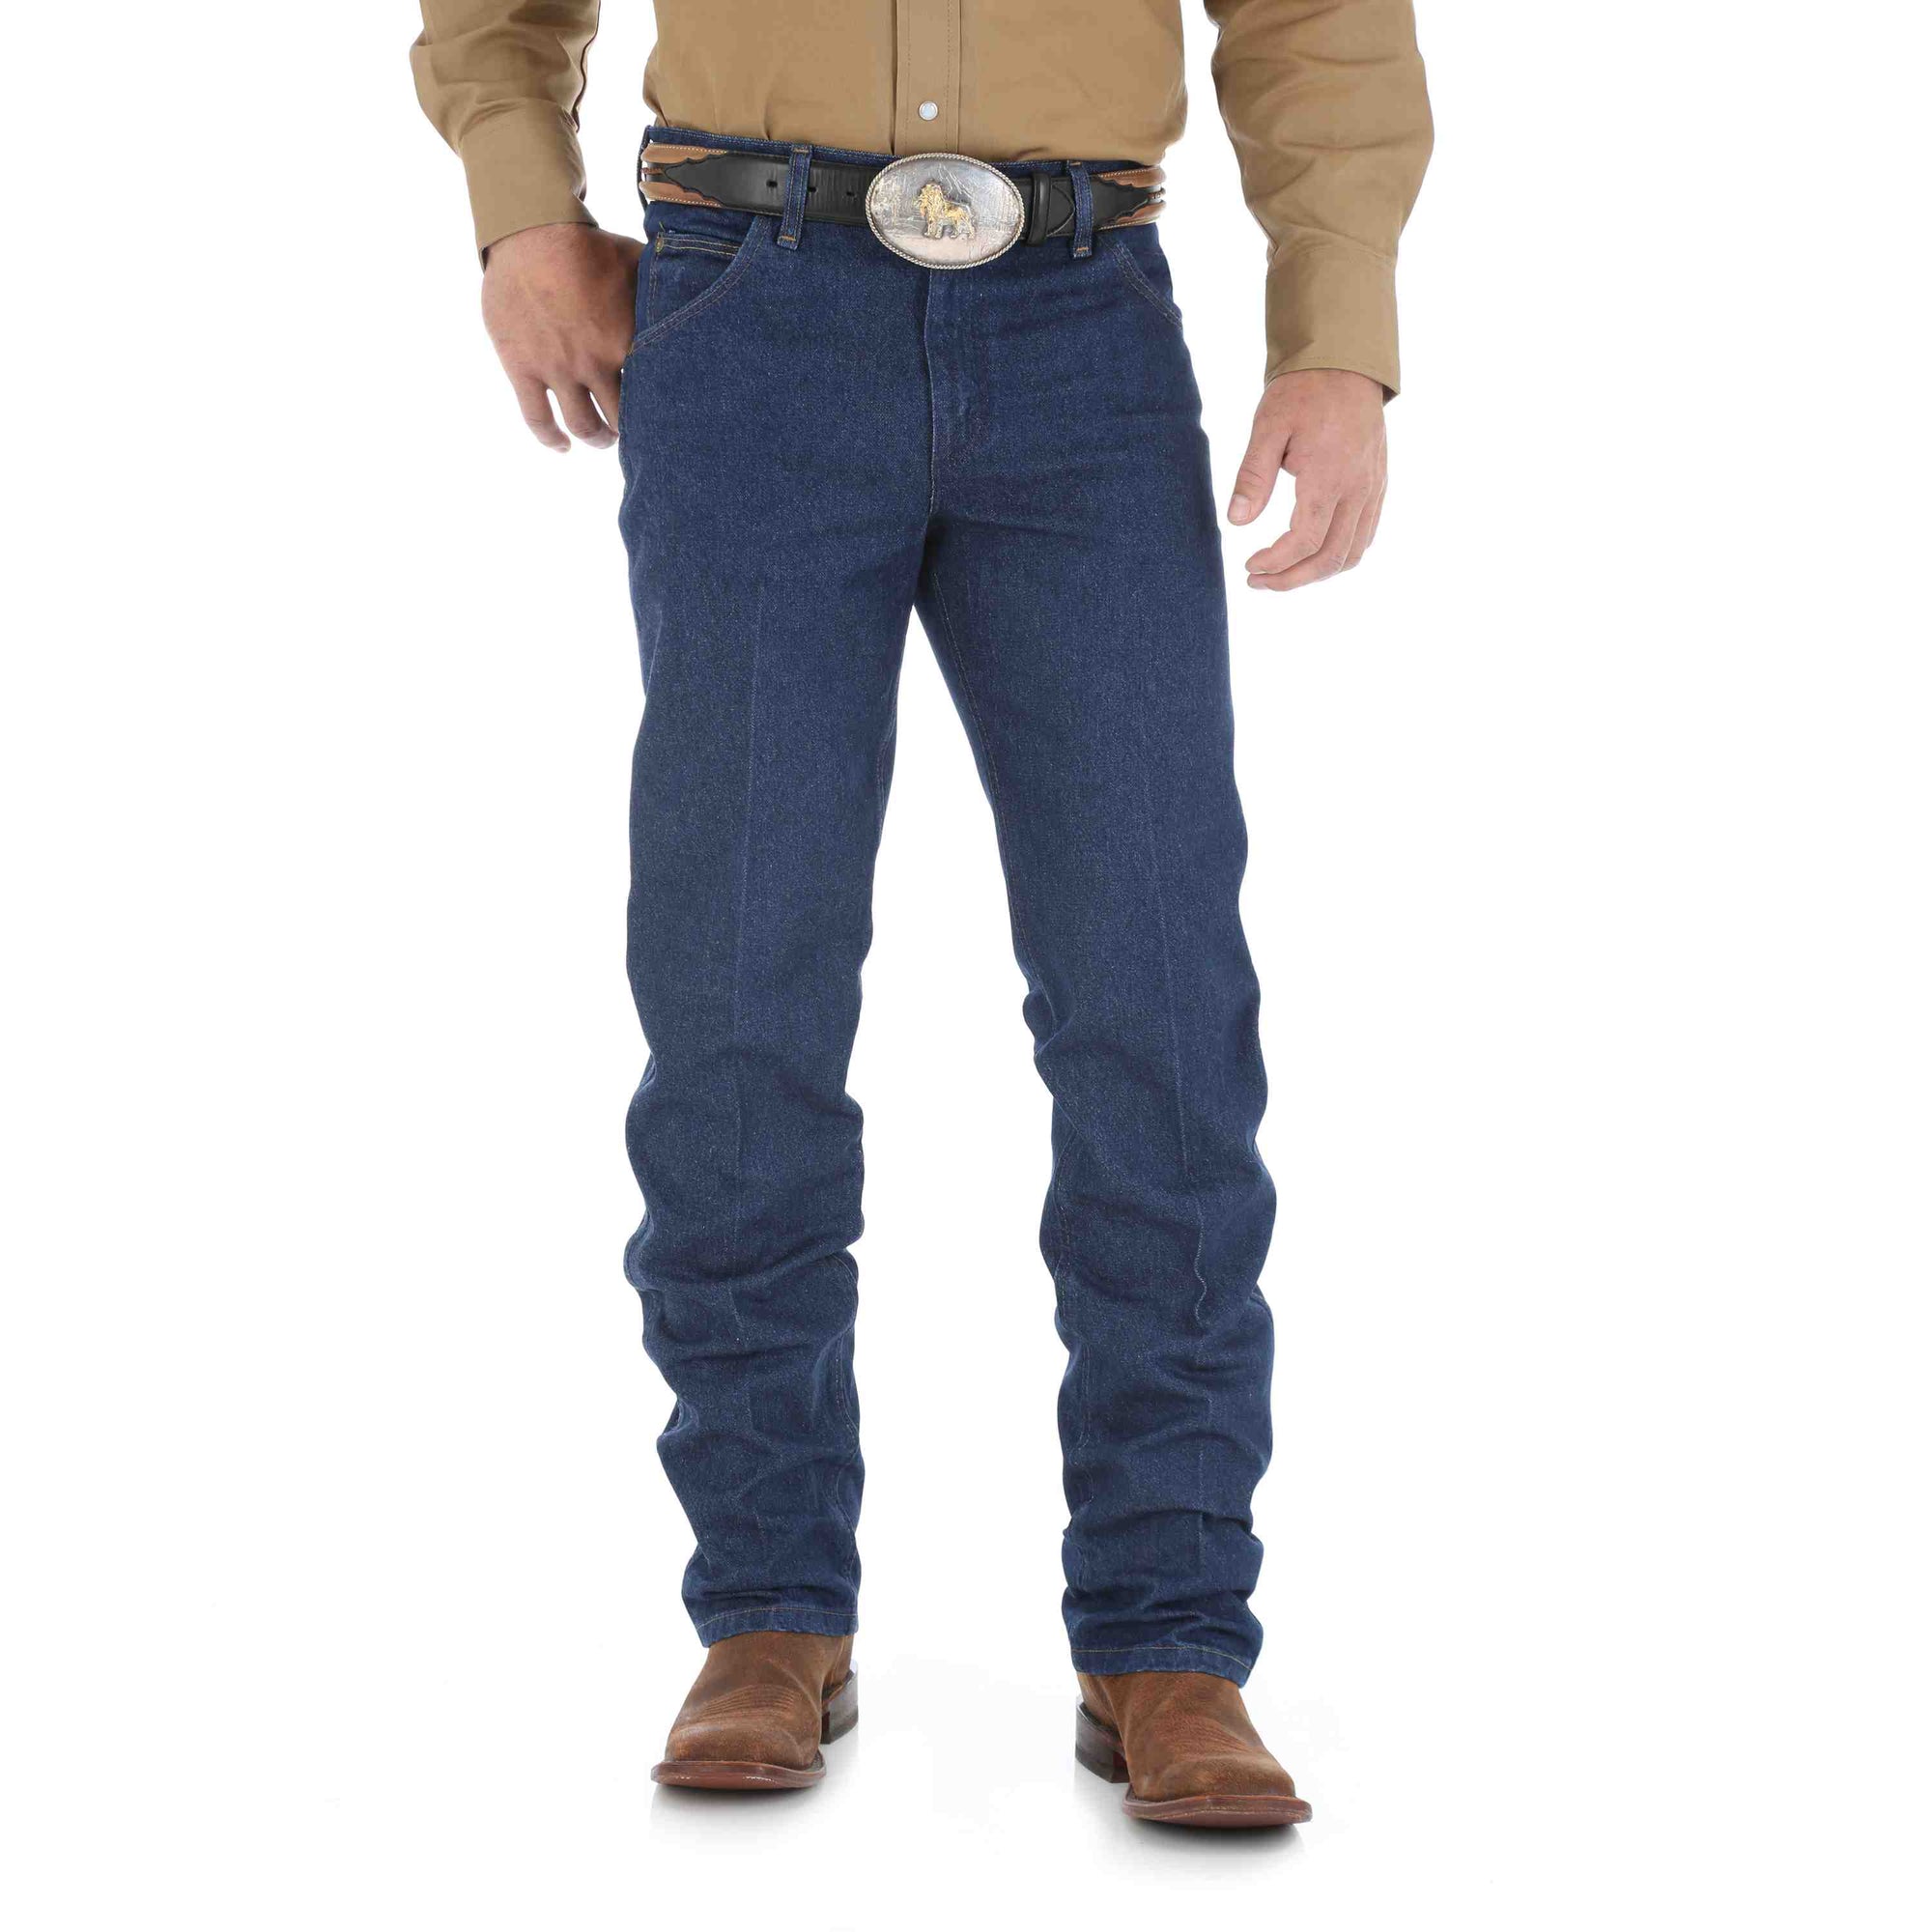 Wrangler Jeans Wrangler Men's Premium Performance Prewashed Cowboy Cut Jeans 47MWZPW